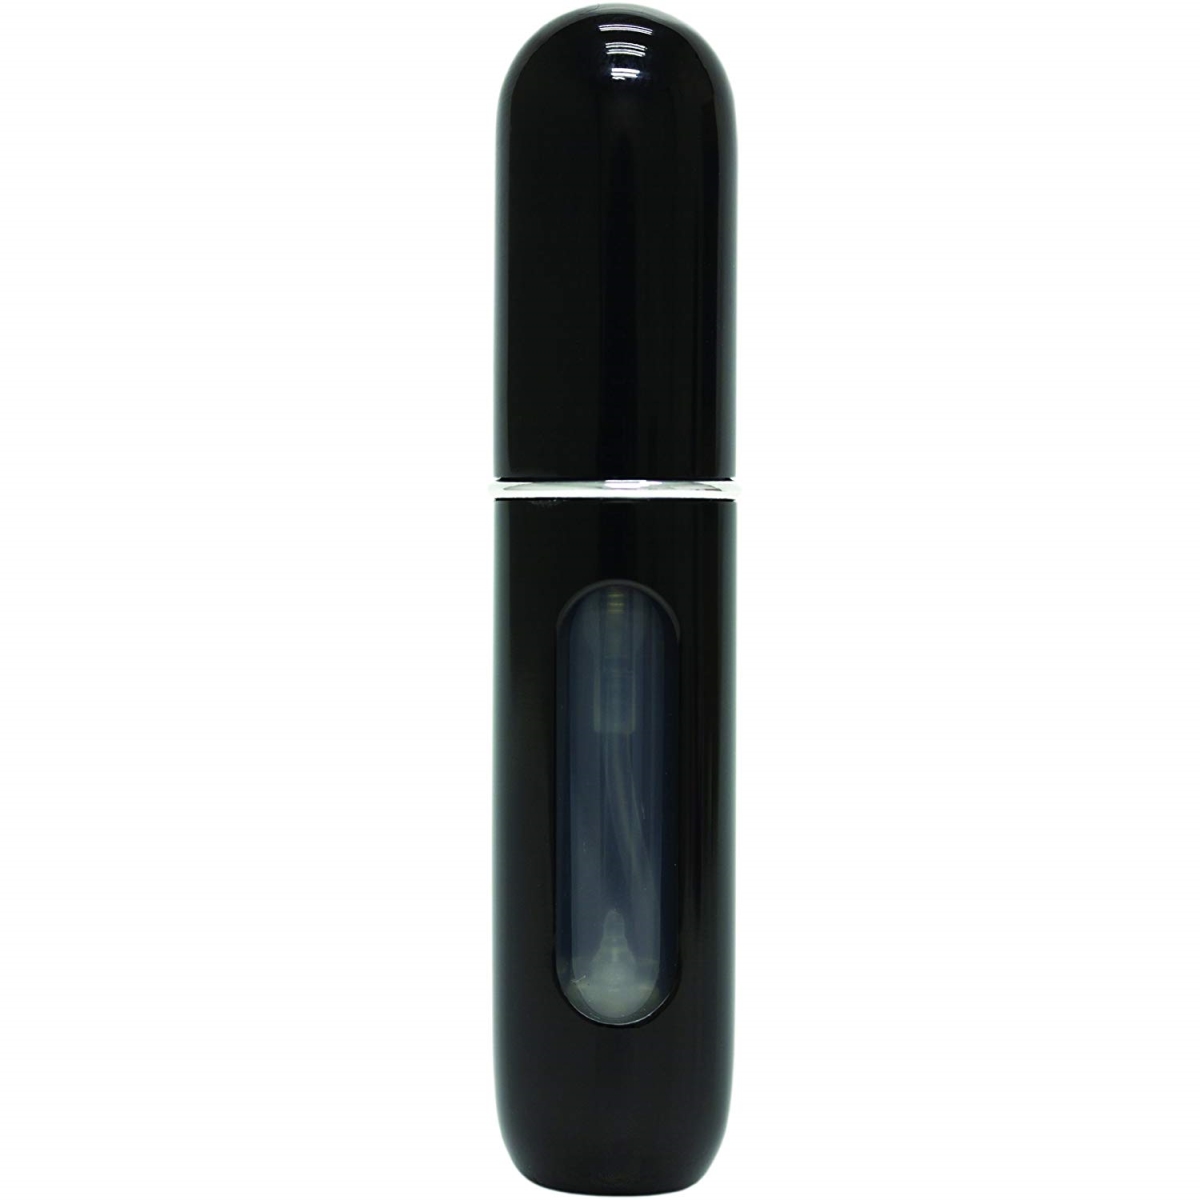 18416 0.13 Oz Pocket Parfum Atomizer, Black